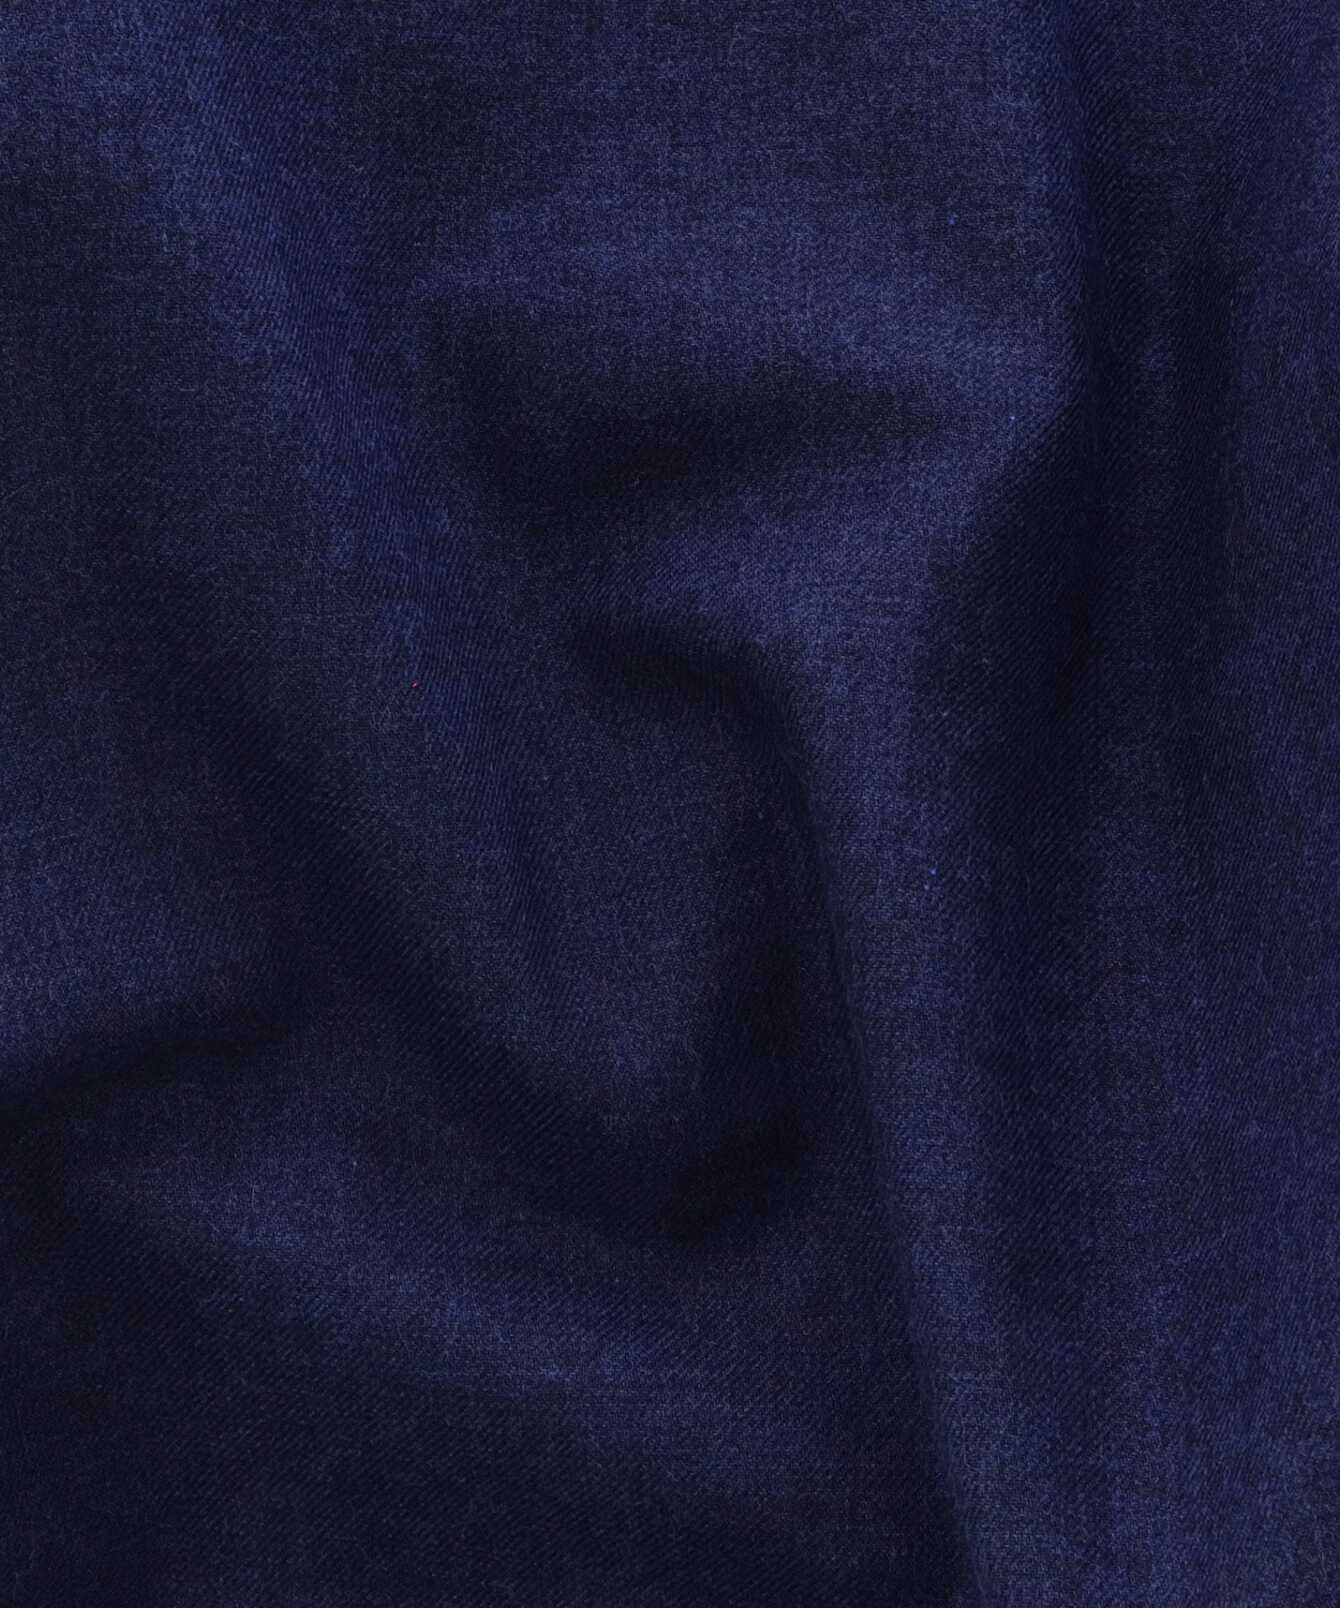 Shirt Costello Dark Blue Twill Shirt Brushed Cotton  The Shirt Factory